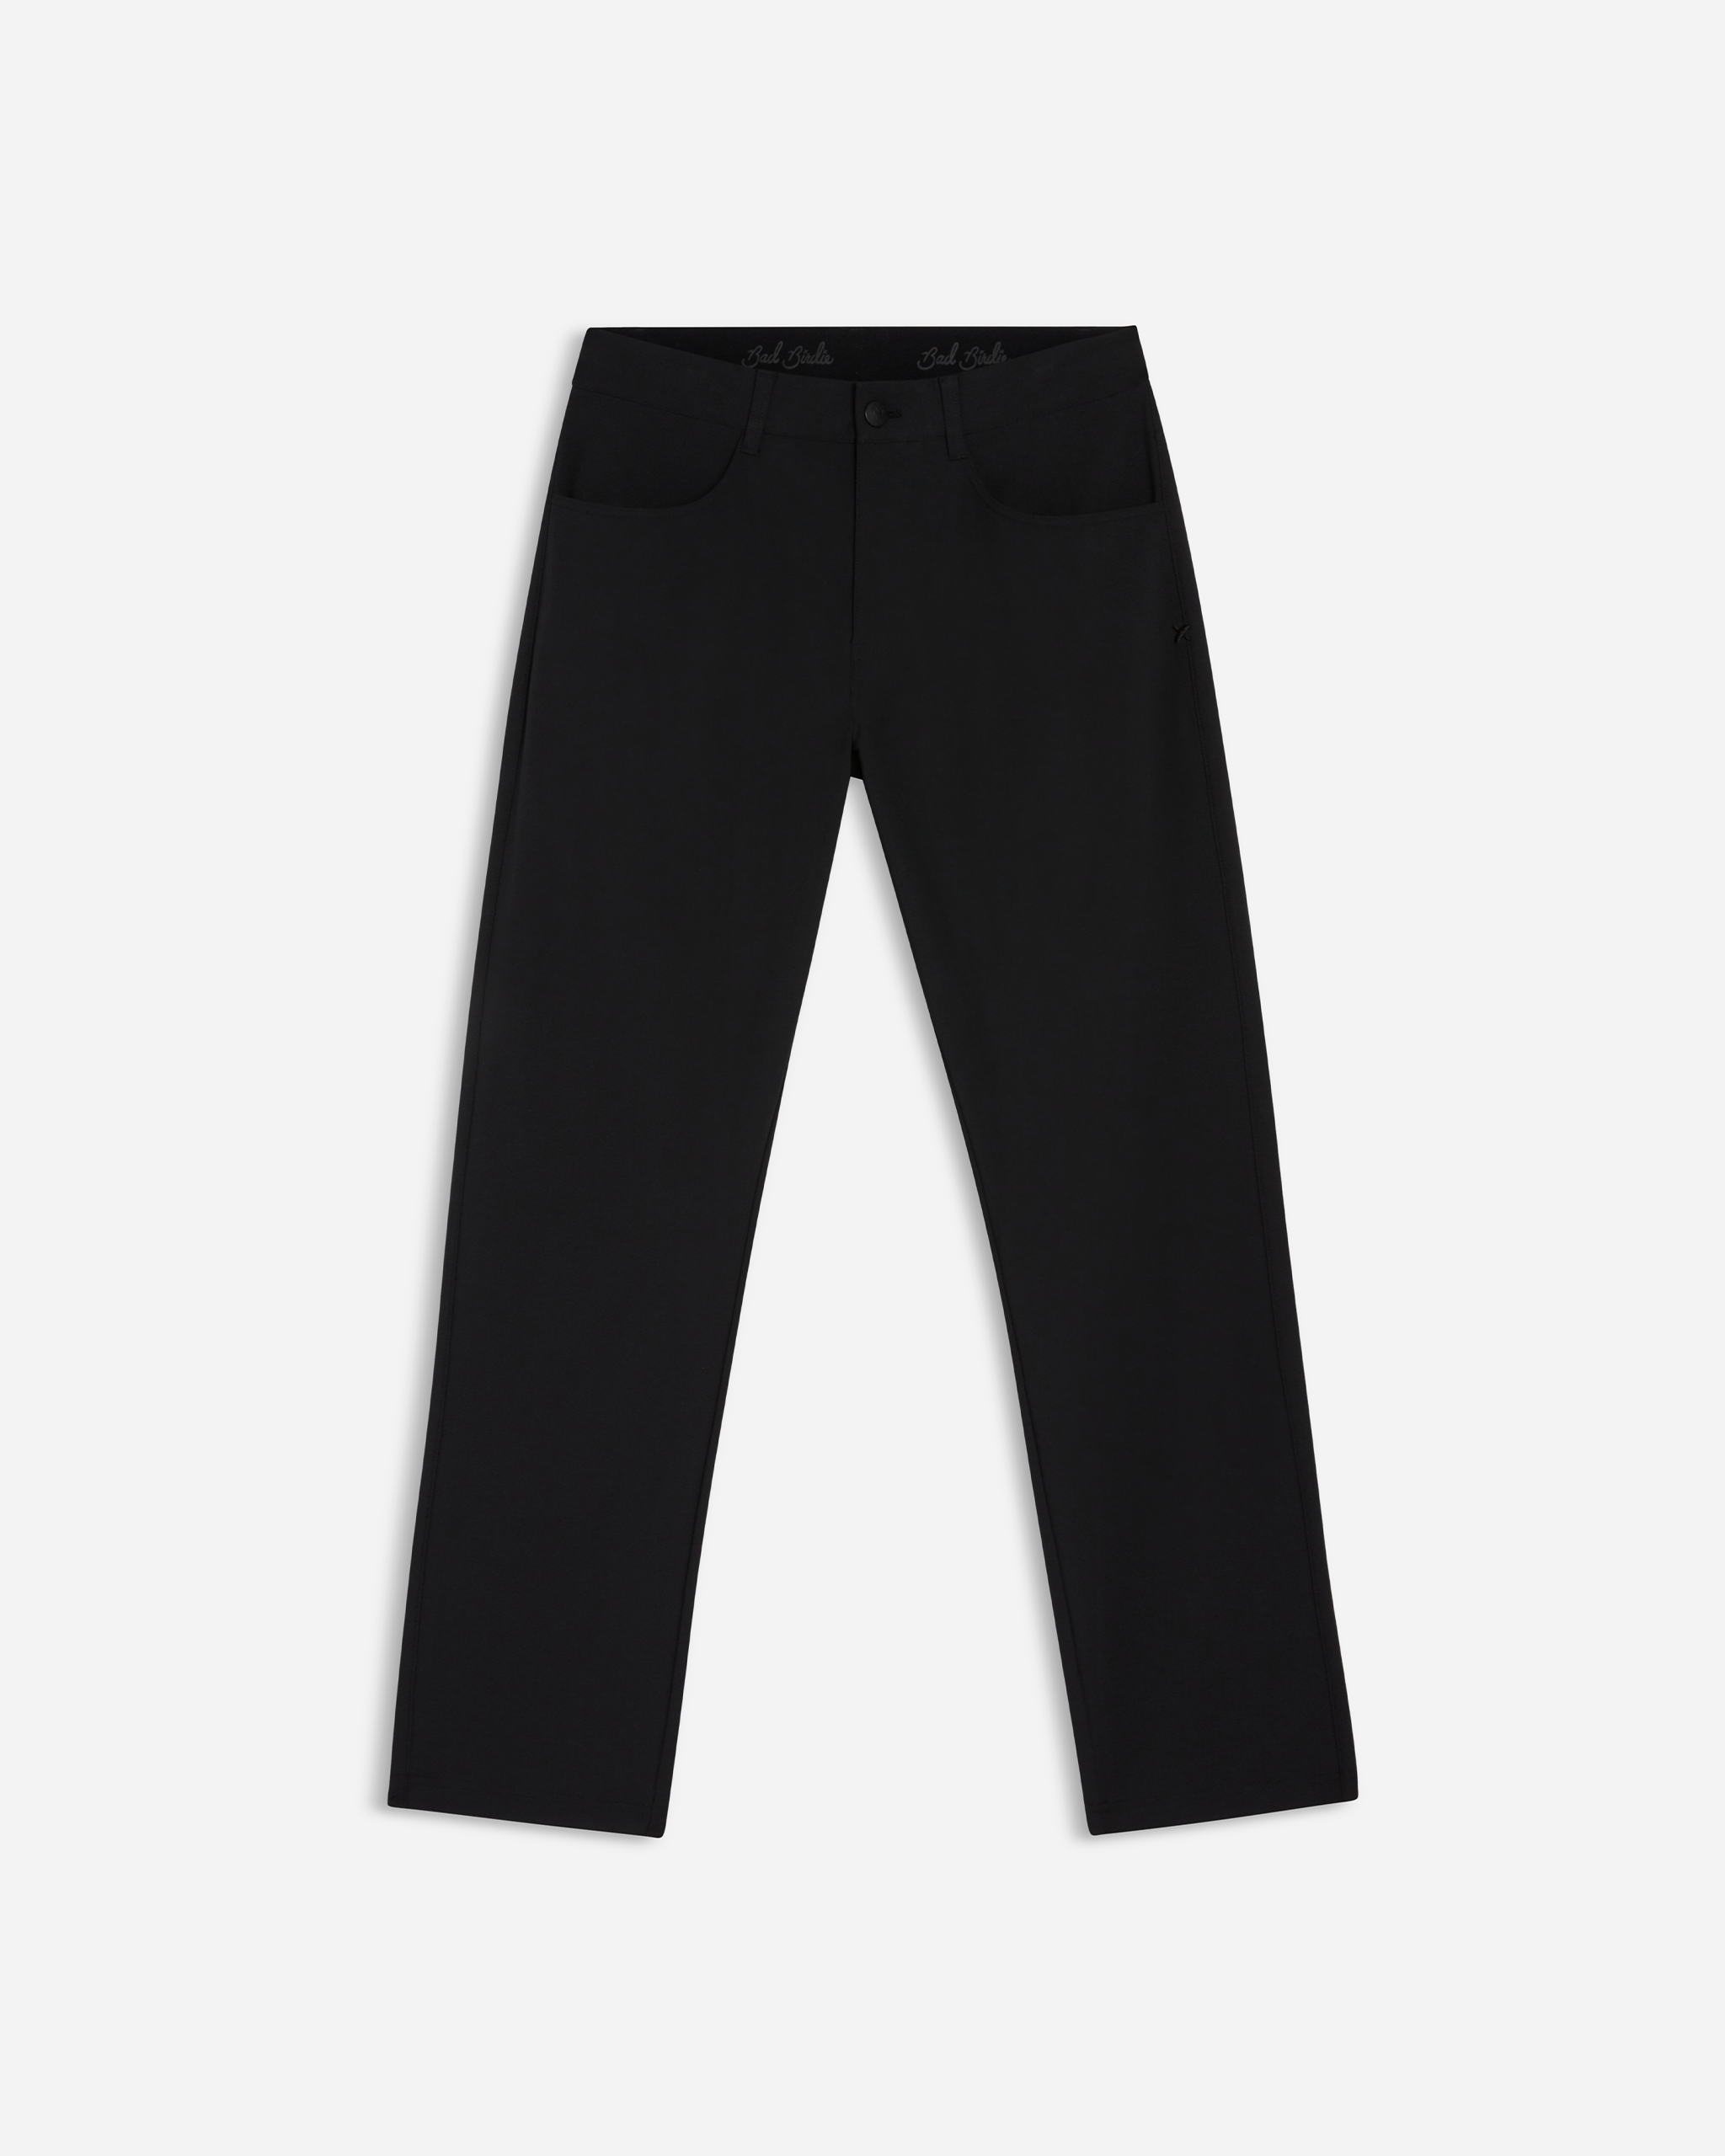 SKINNY FIT JEANS MENS BLACK - Best stretch skinny jeans, chinos | Nicerior